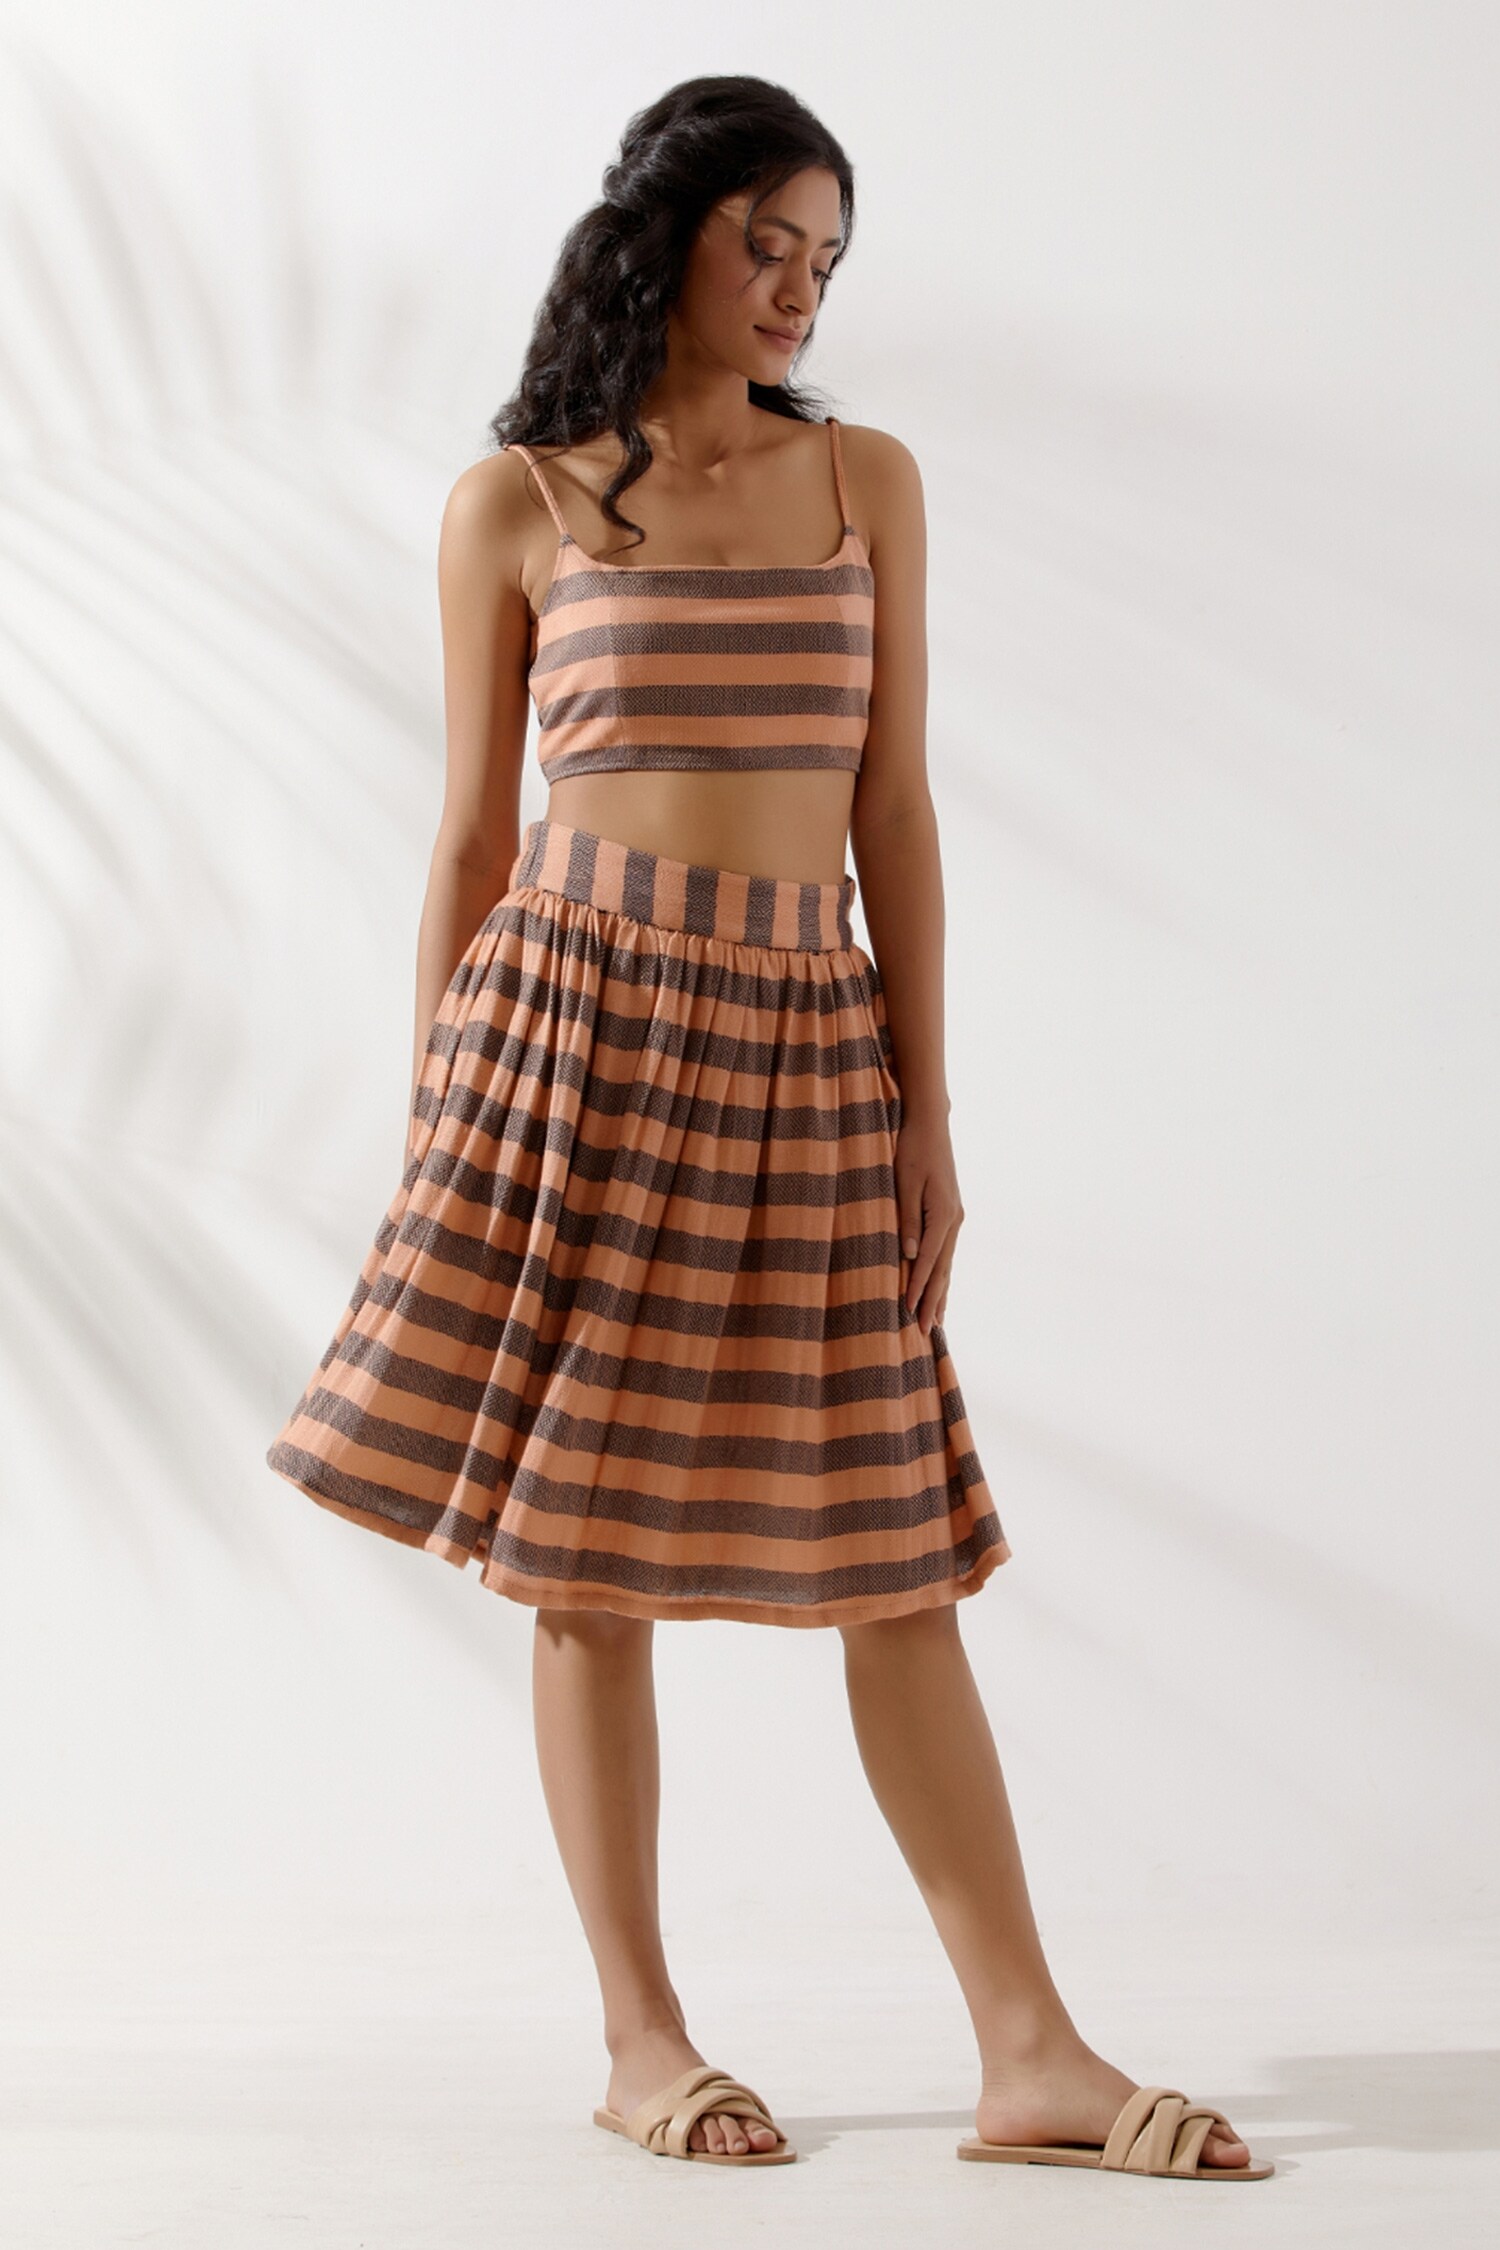 TIC Peach Cotton Jacquard Striped Bralette And Skirt Set